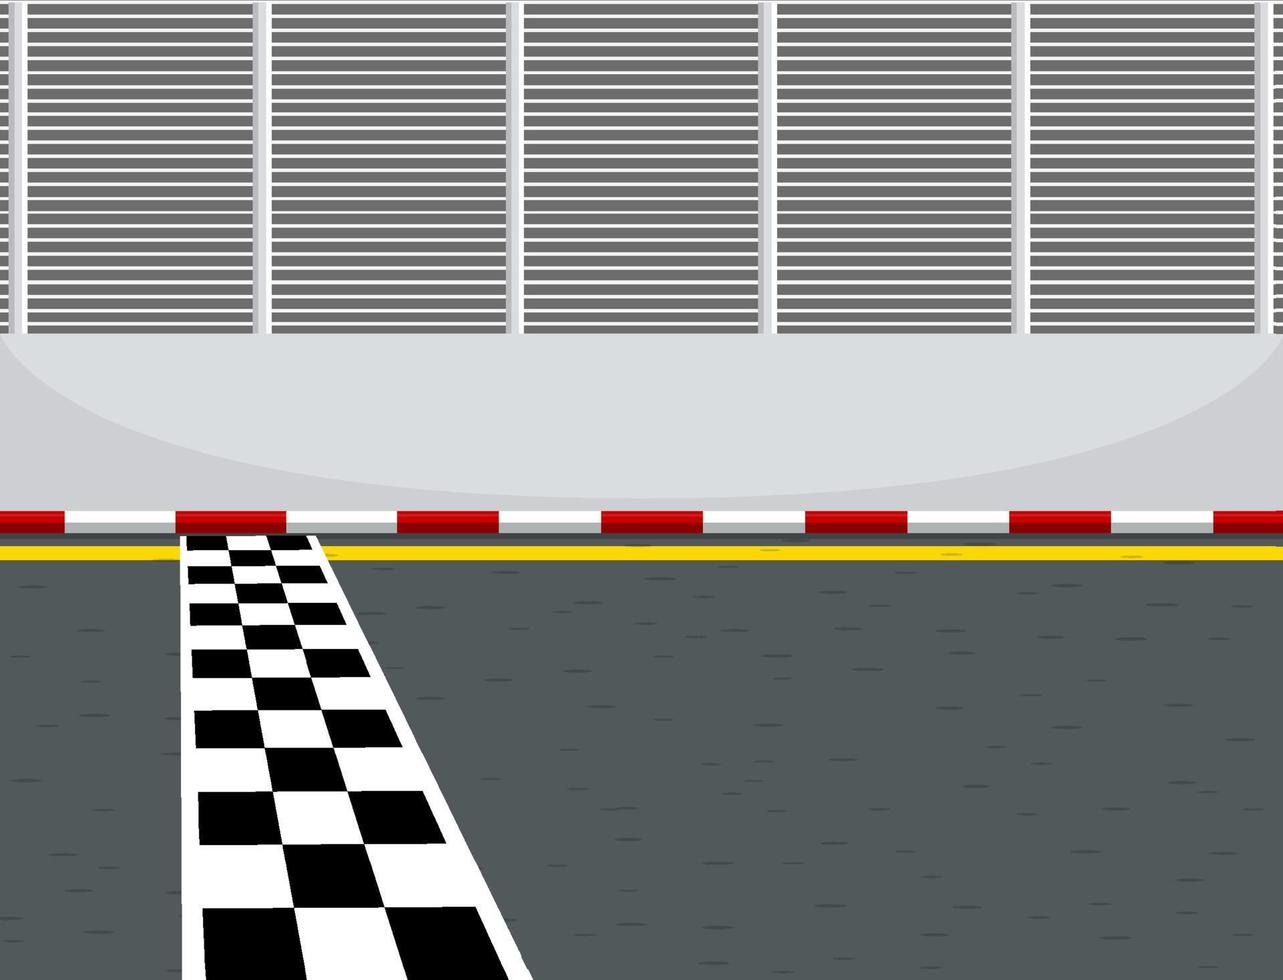 pista de carreras con línea de salida o meta vector